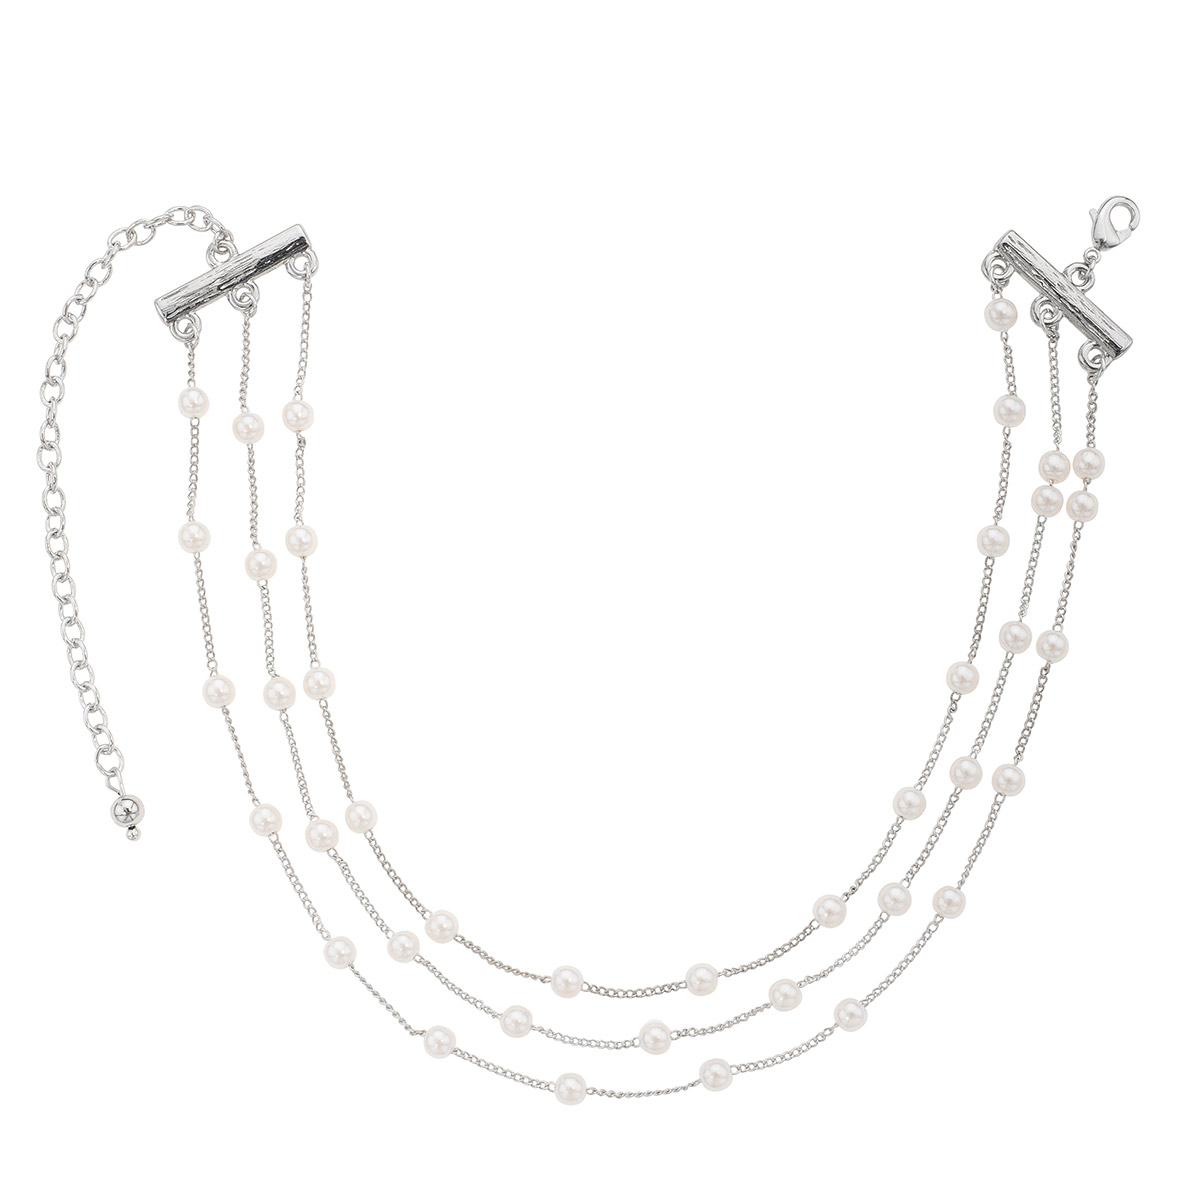 Collar a tres cadenas, con perlas en tono cream.
-Collar
-32 cm + 10 cm ext.
-Baño de platino
-Perlas en tono cream